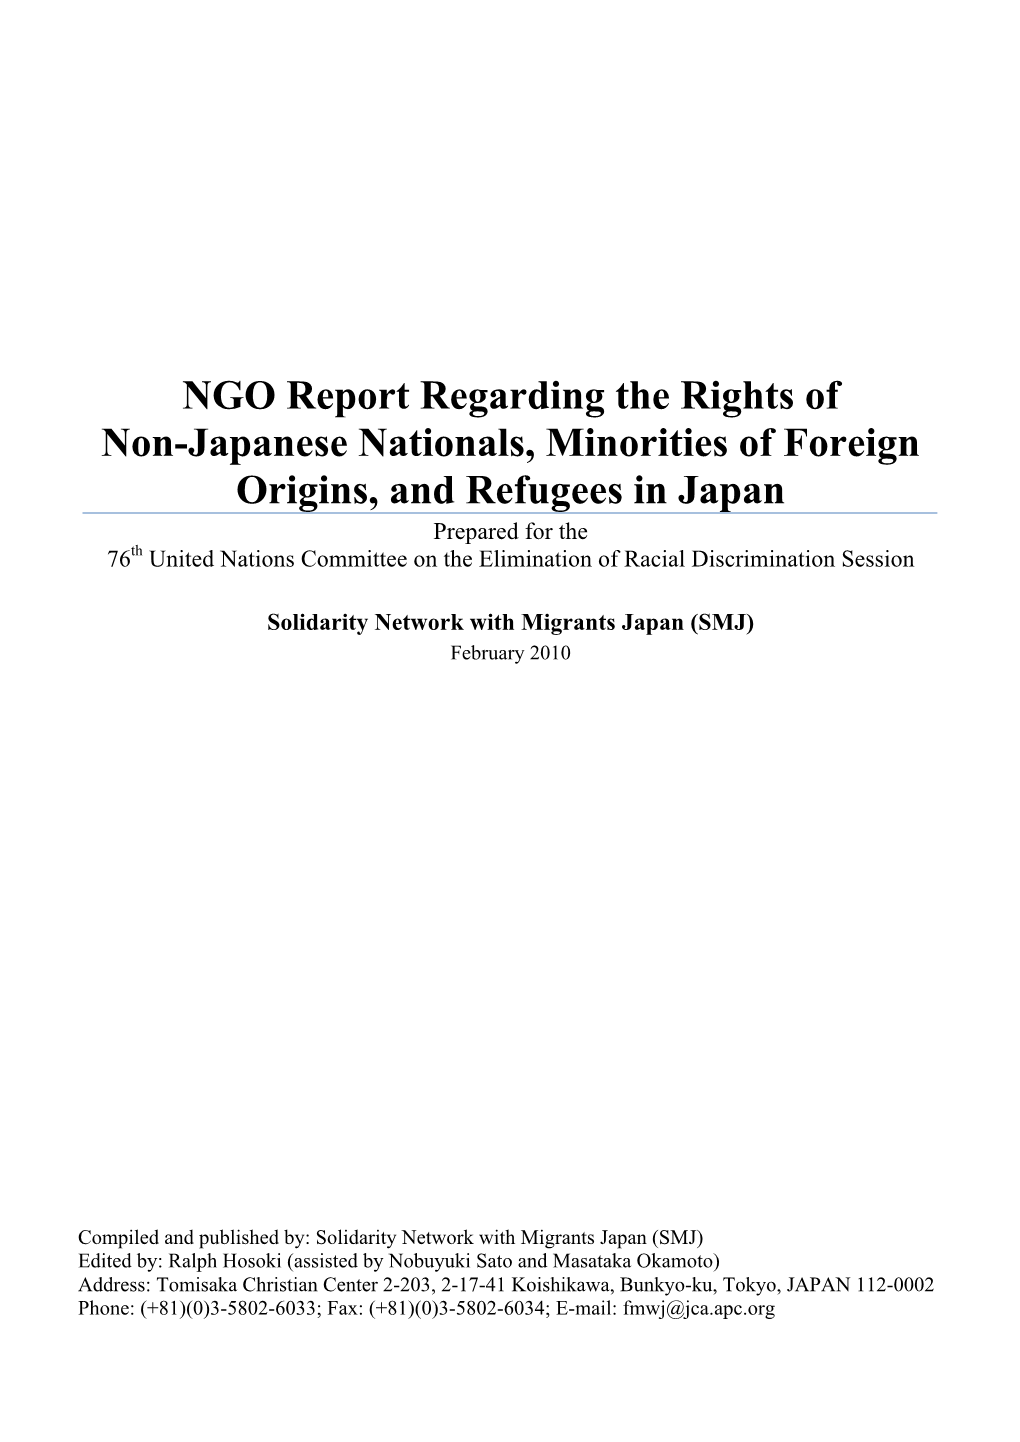 NGO Report Regarding the Rights of Non-Japanese Nationals, Minorities